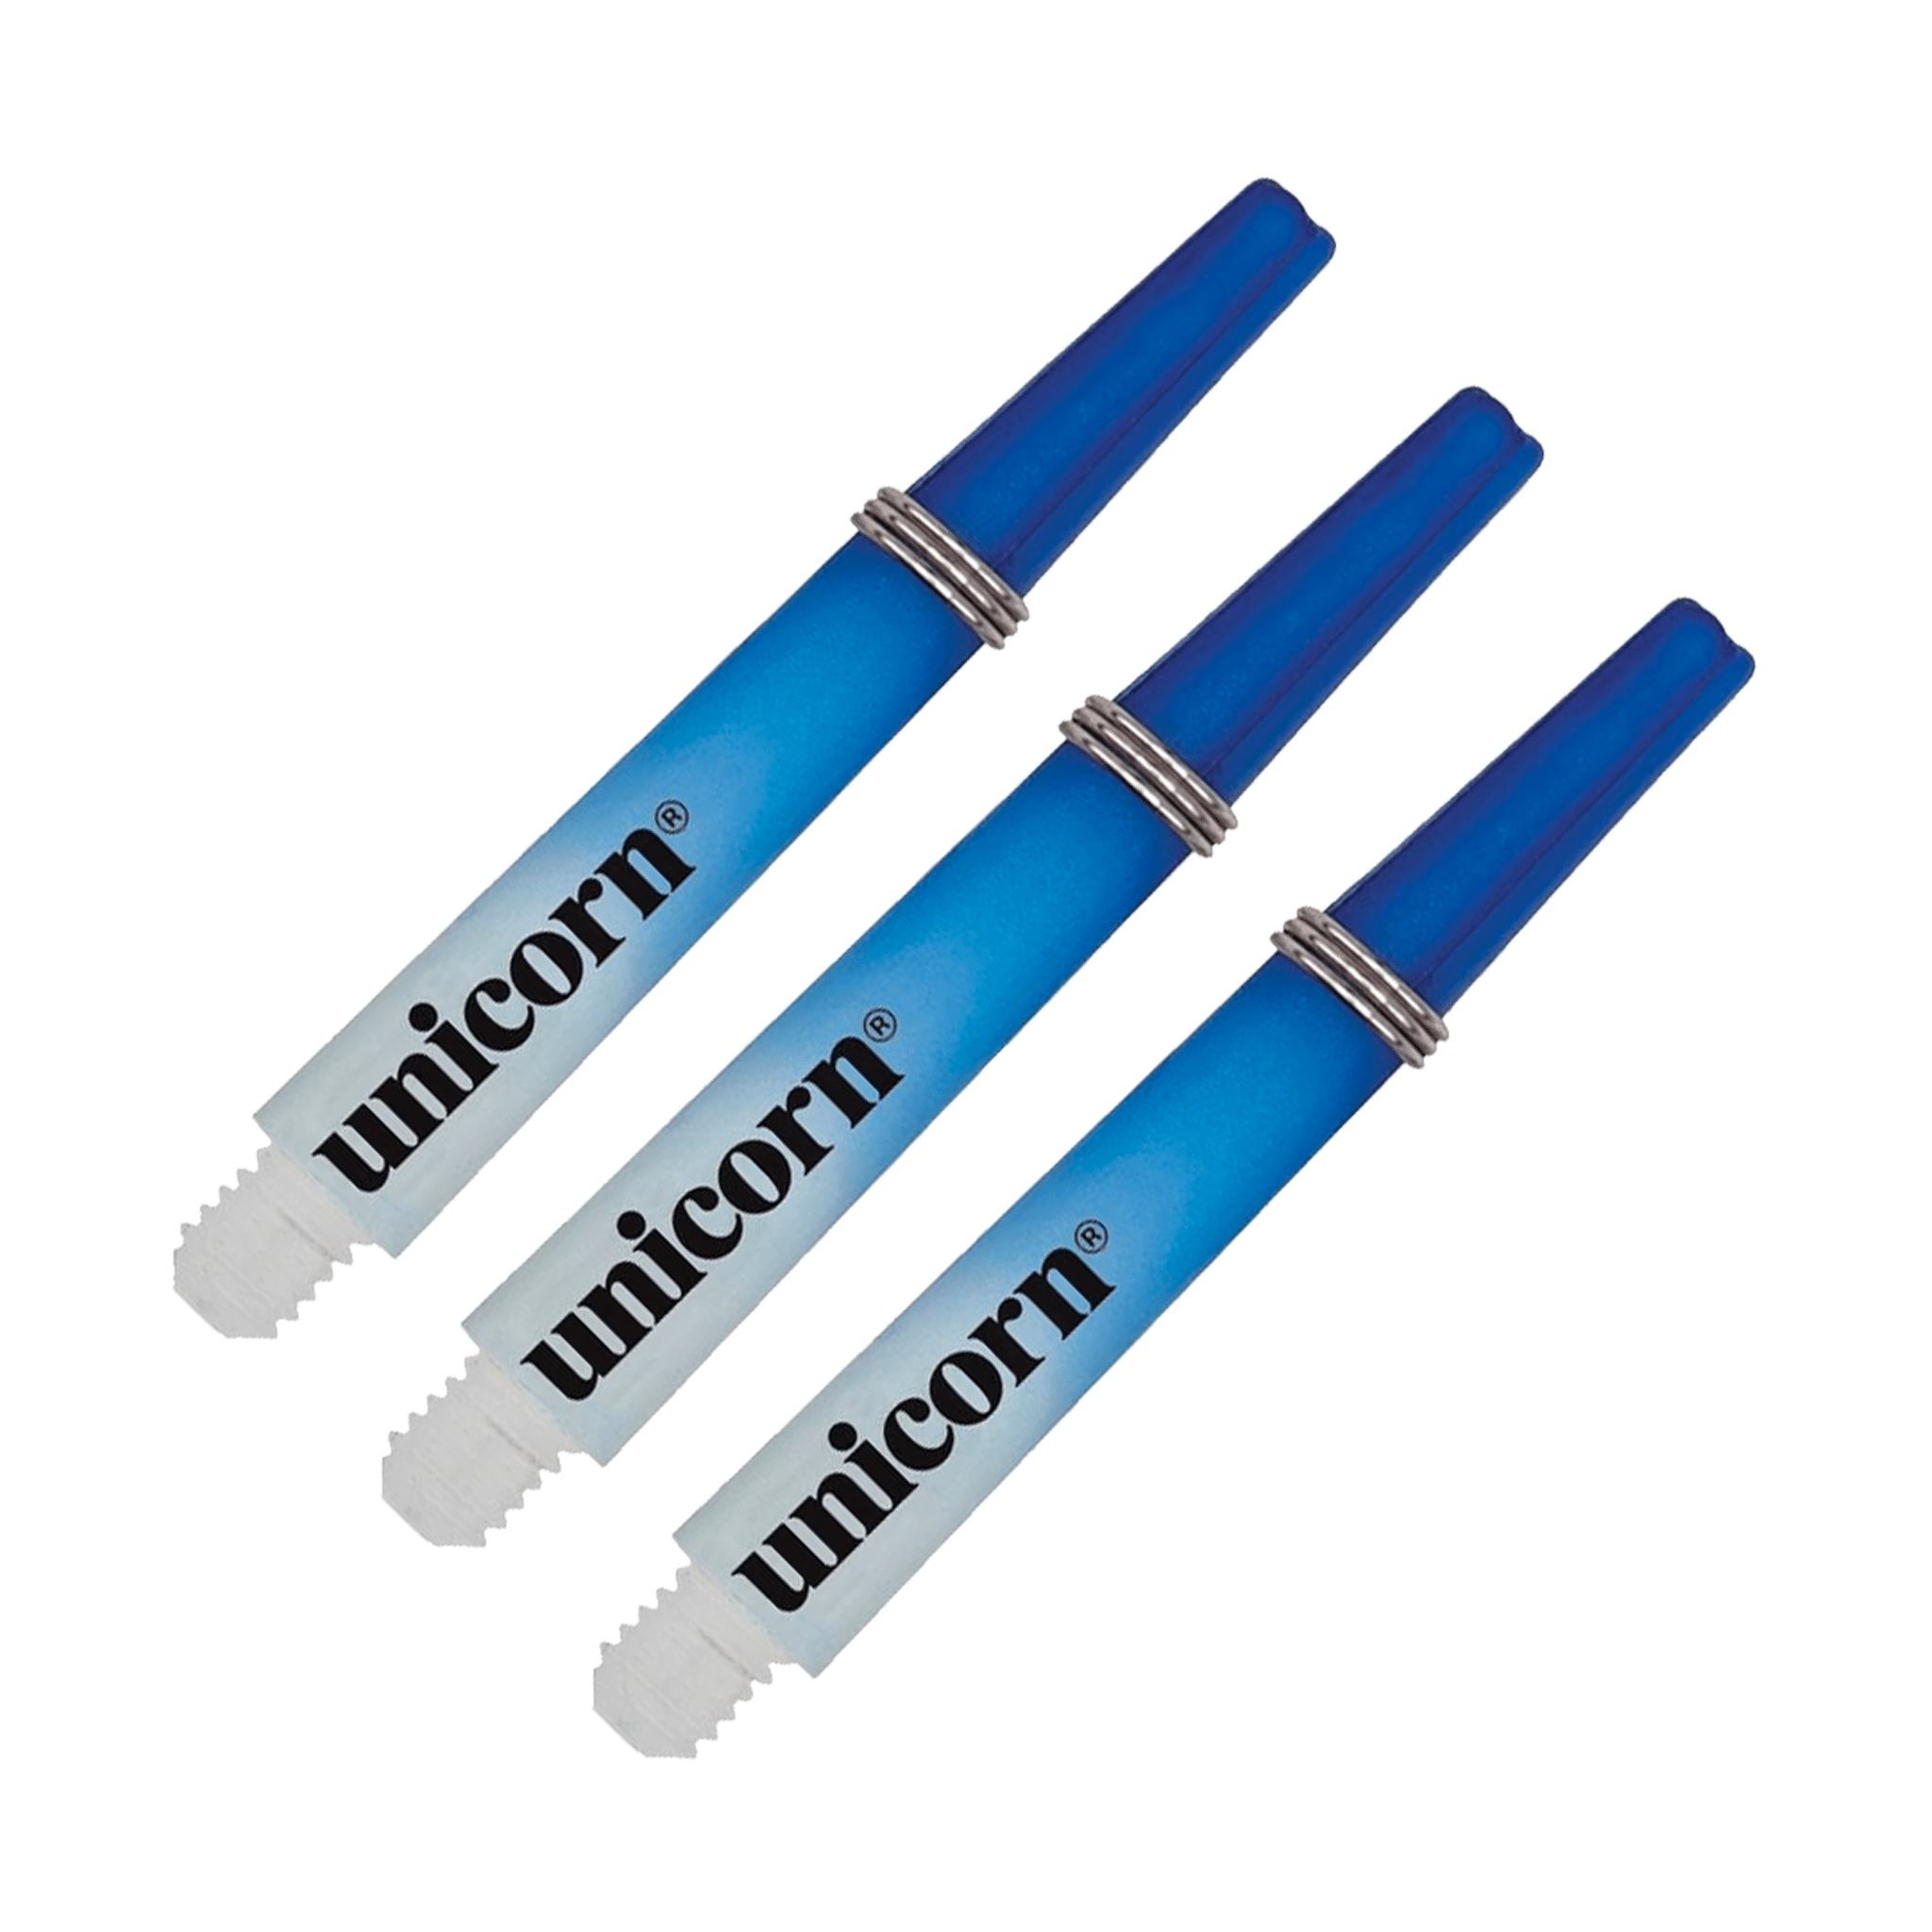 Unicorn Gripper 3 Two Tone Short (34.4 mm) Nylon Dart Shafts Blue Shafts